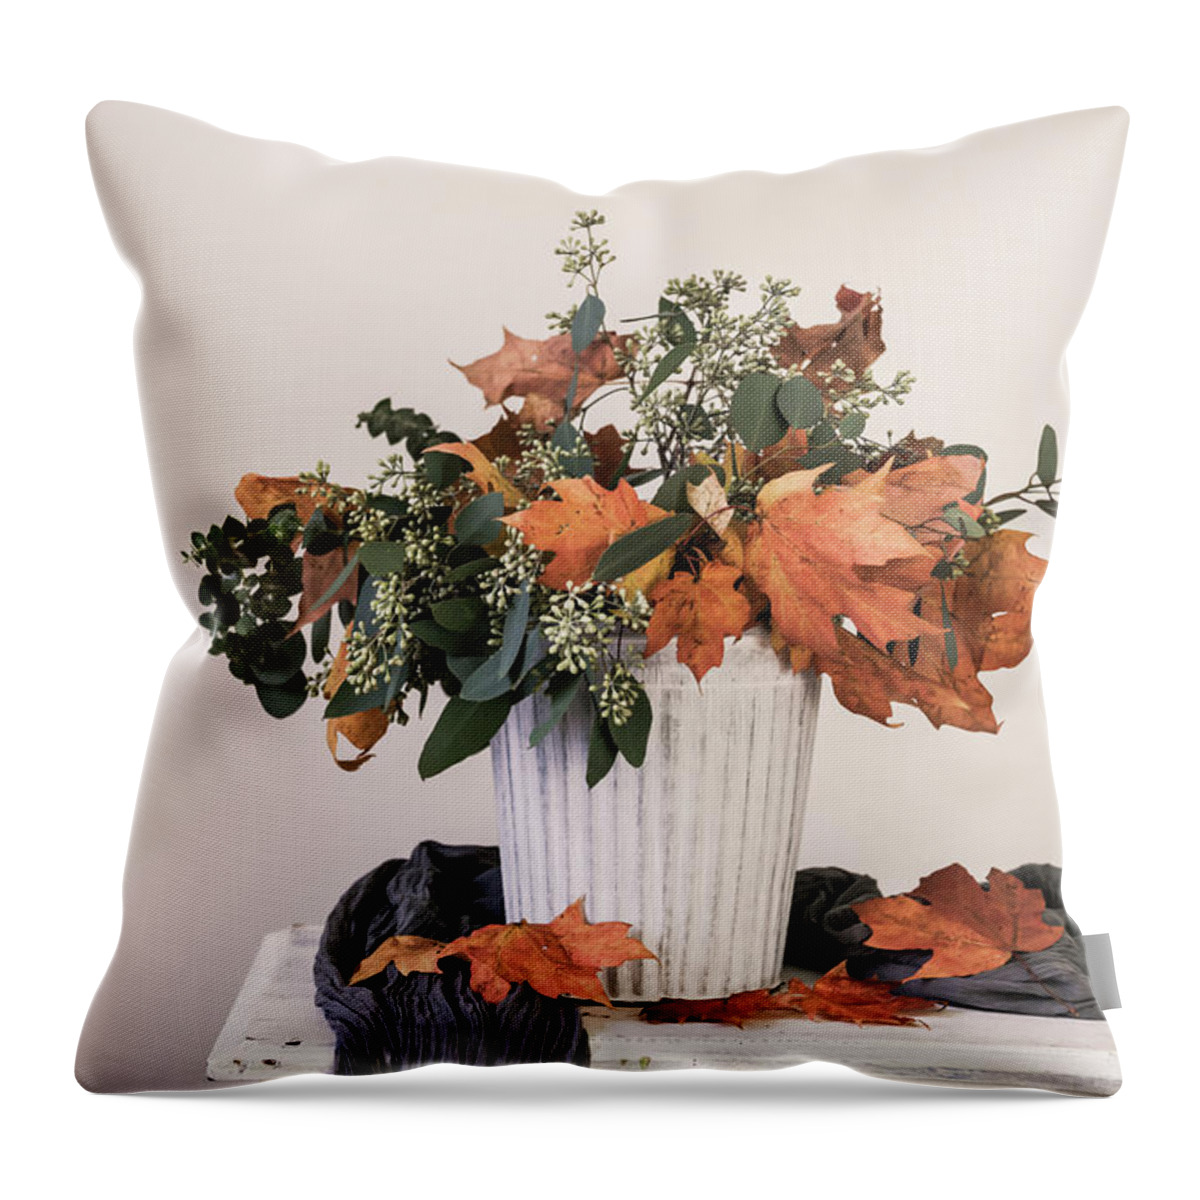 Leave Throw Pillow featuring the photograph Autumn Arrangement by Kim Hojnacki